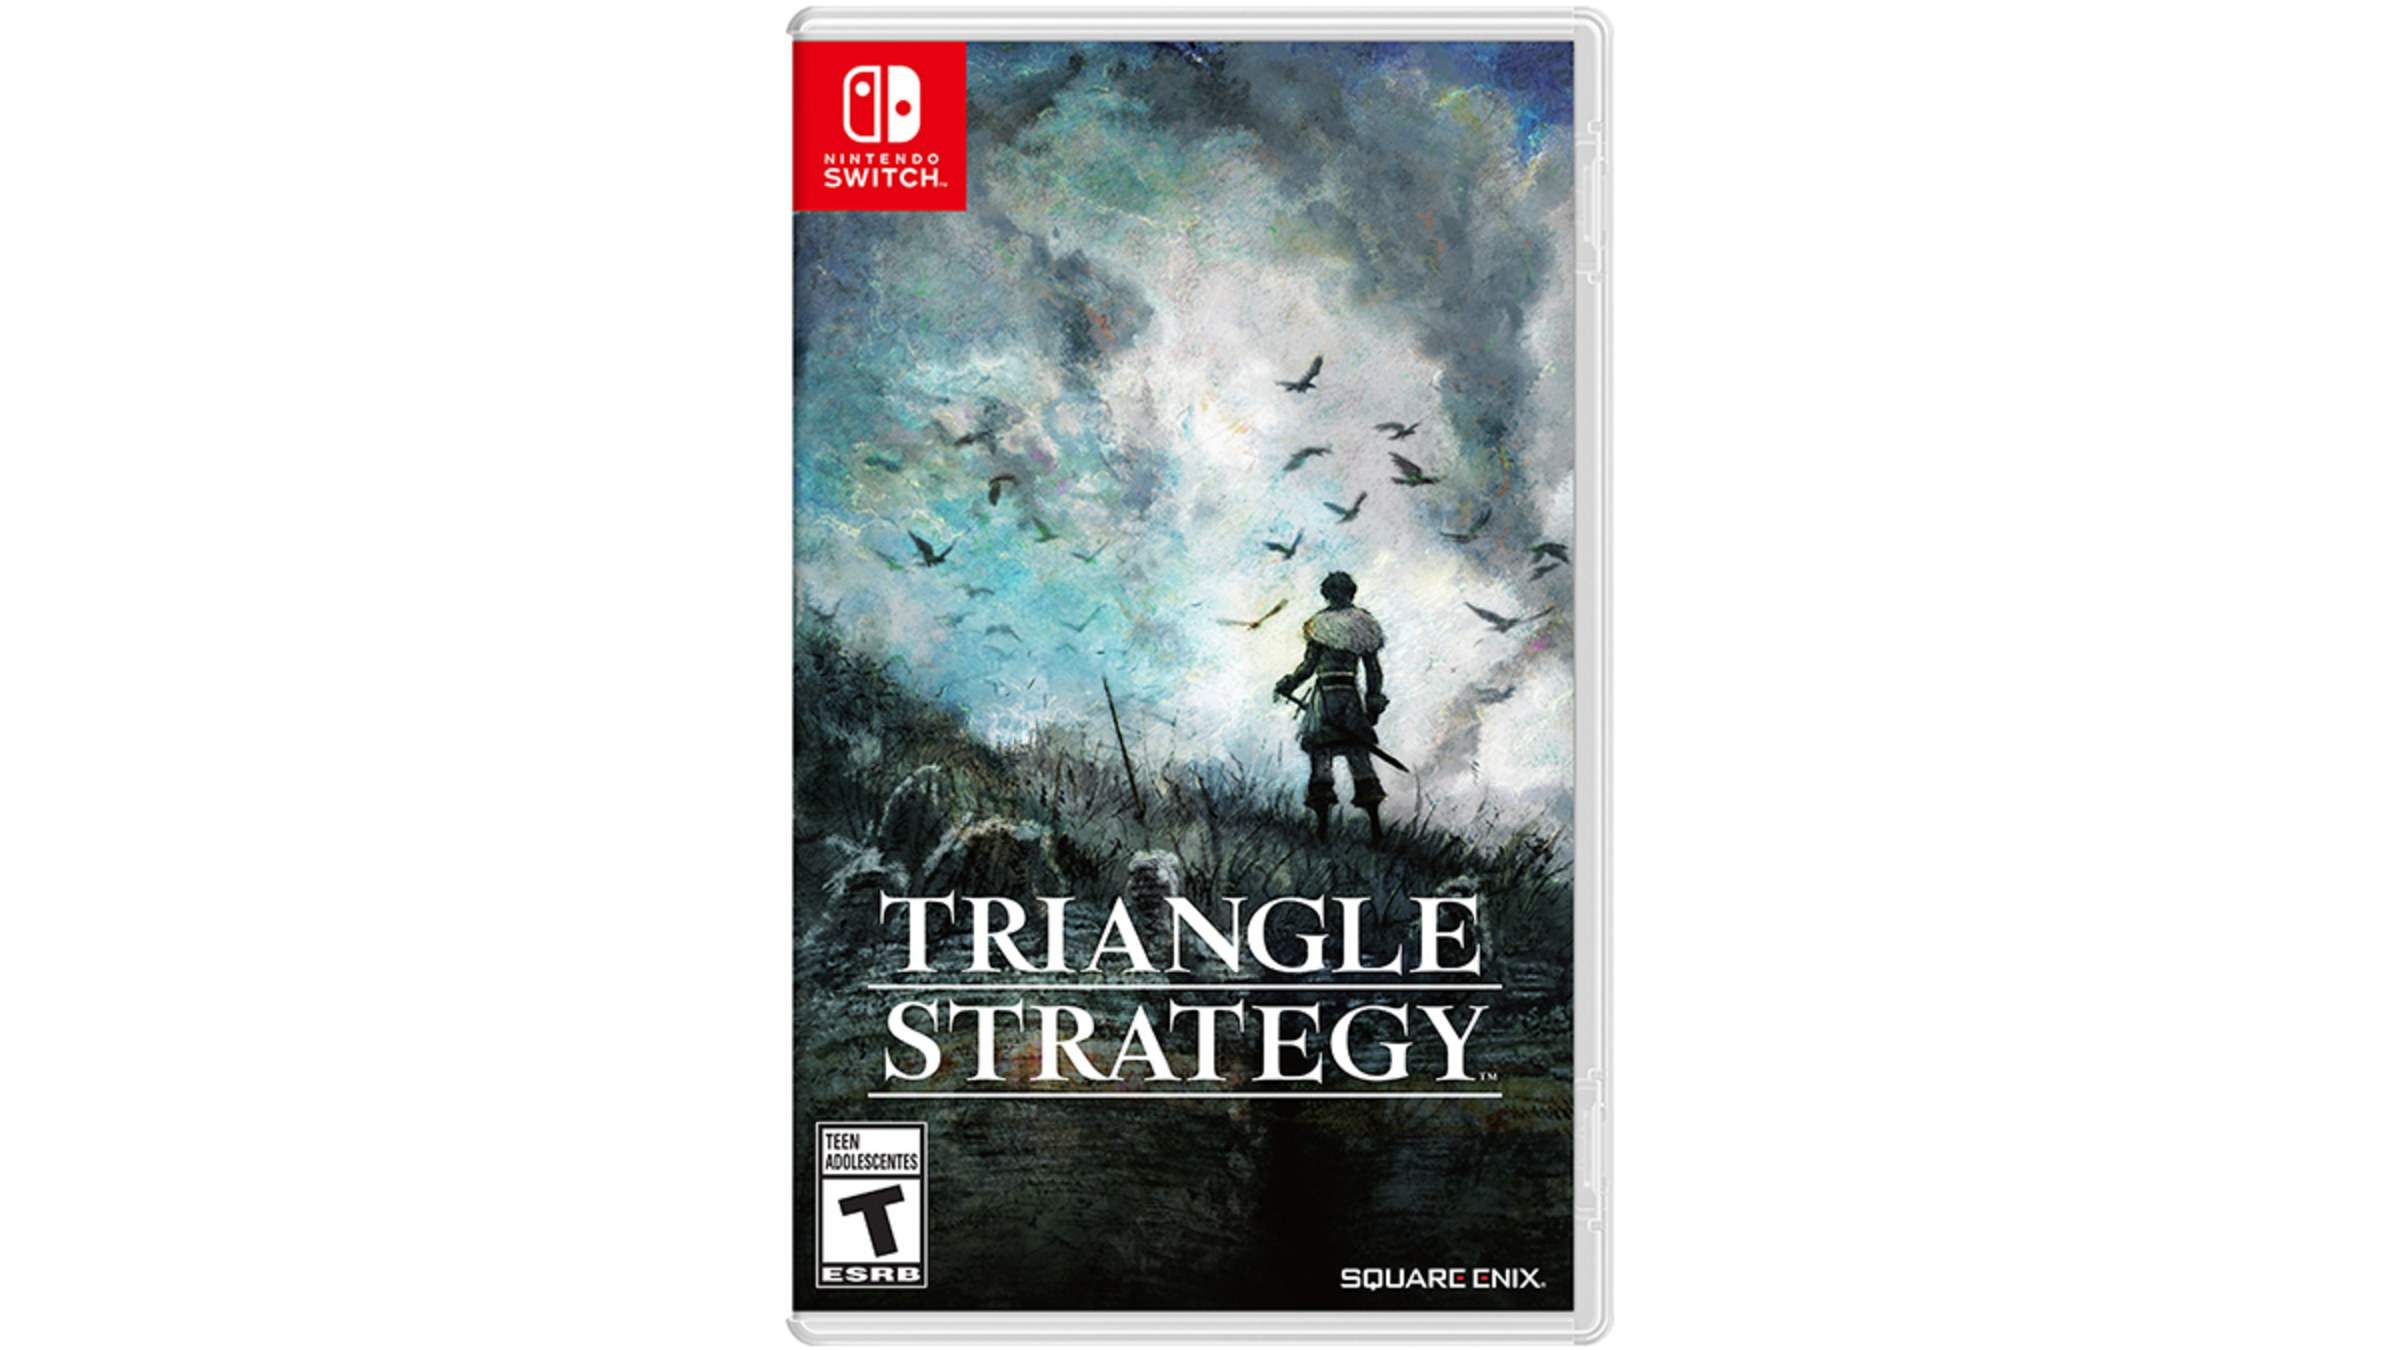 TRIANGLE STRATEGY (NINTENDO Switch Game, AUS PAL, Square Enix